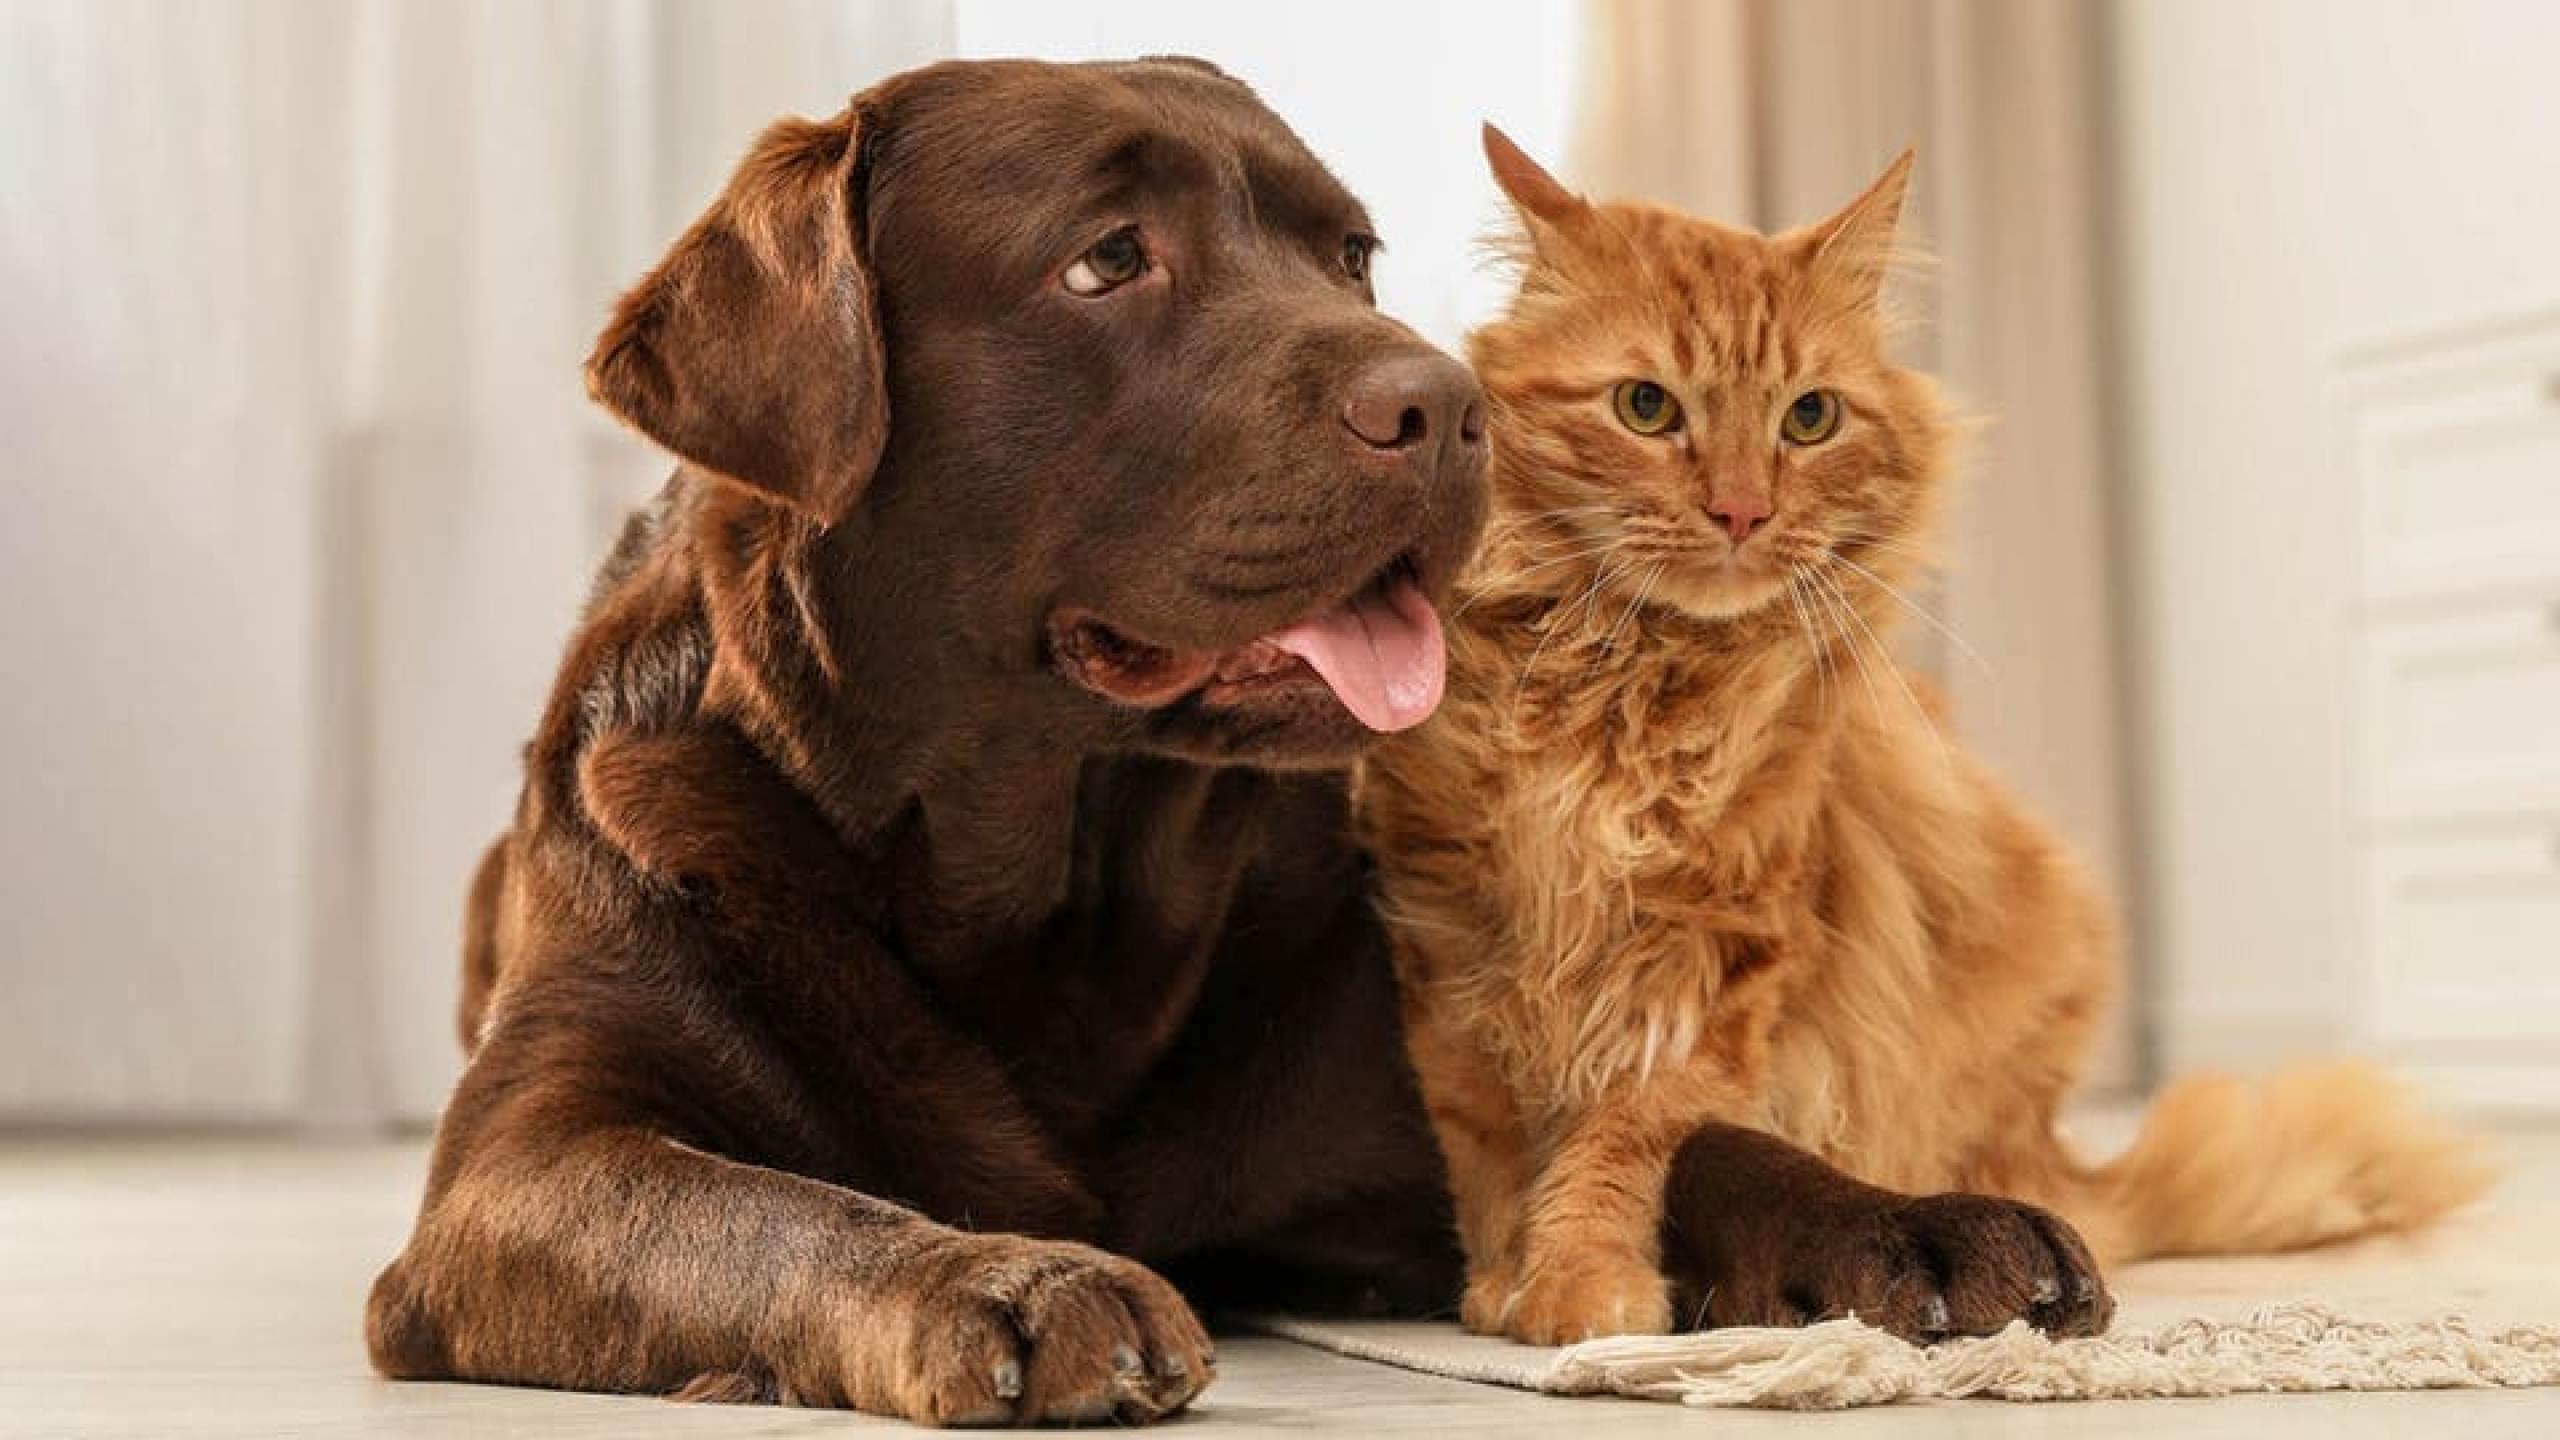 Фото собаки и кошки вместе на красивом фоне в квартире